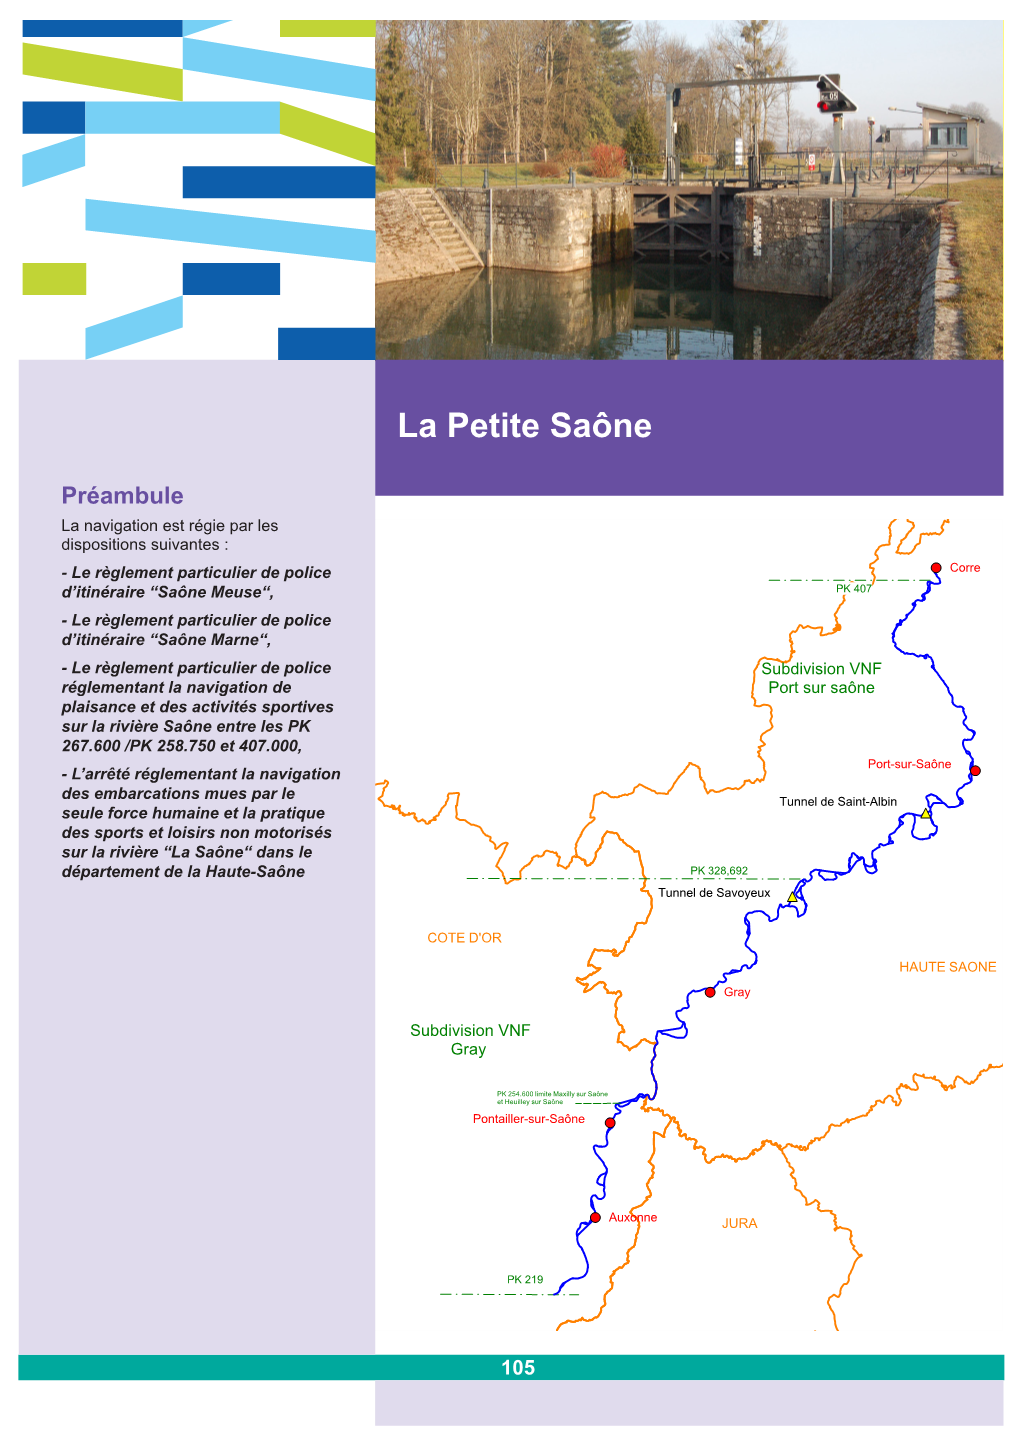 La Petite Saône